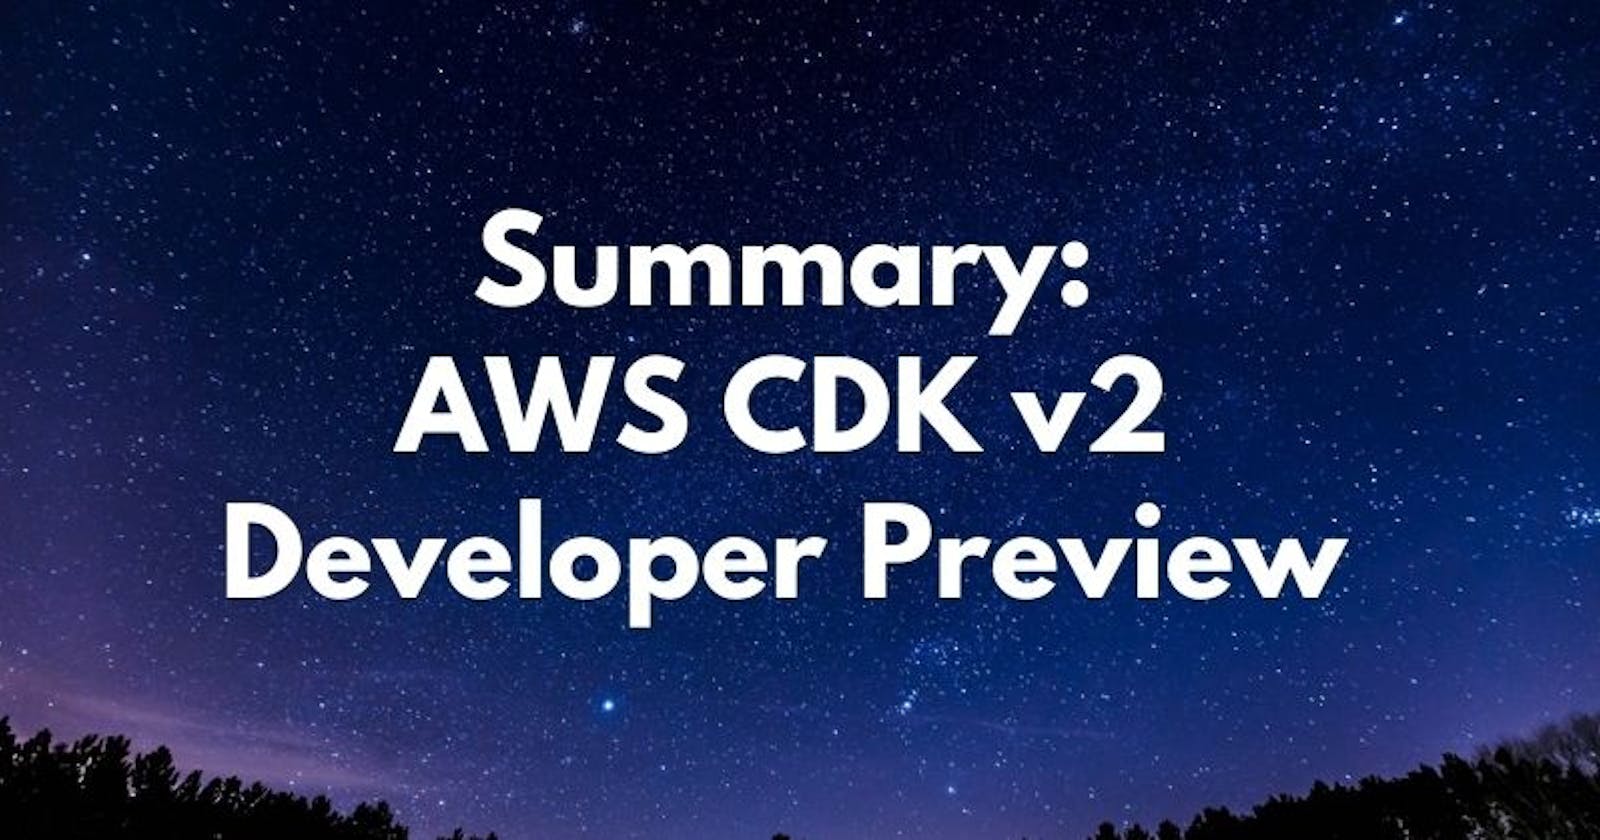 Summary: AWS CDK v2 Developer Preview announcement